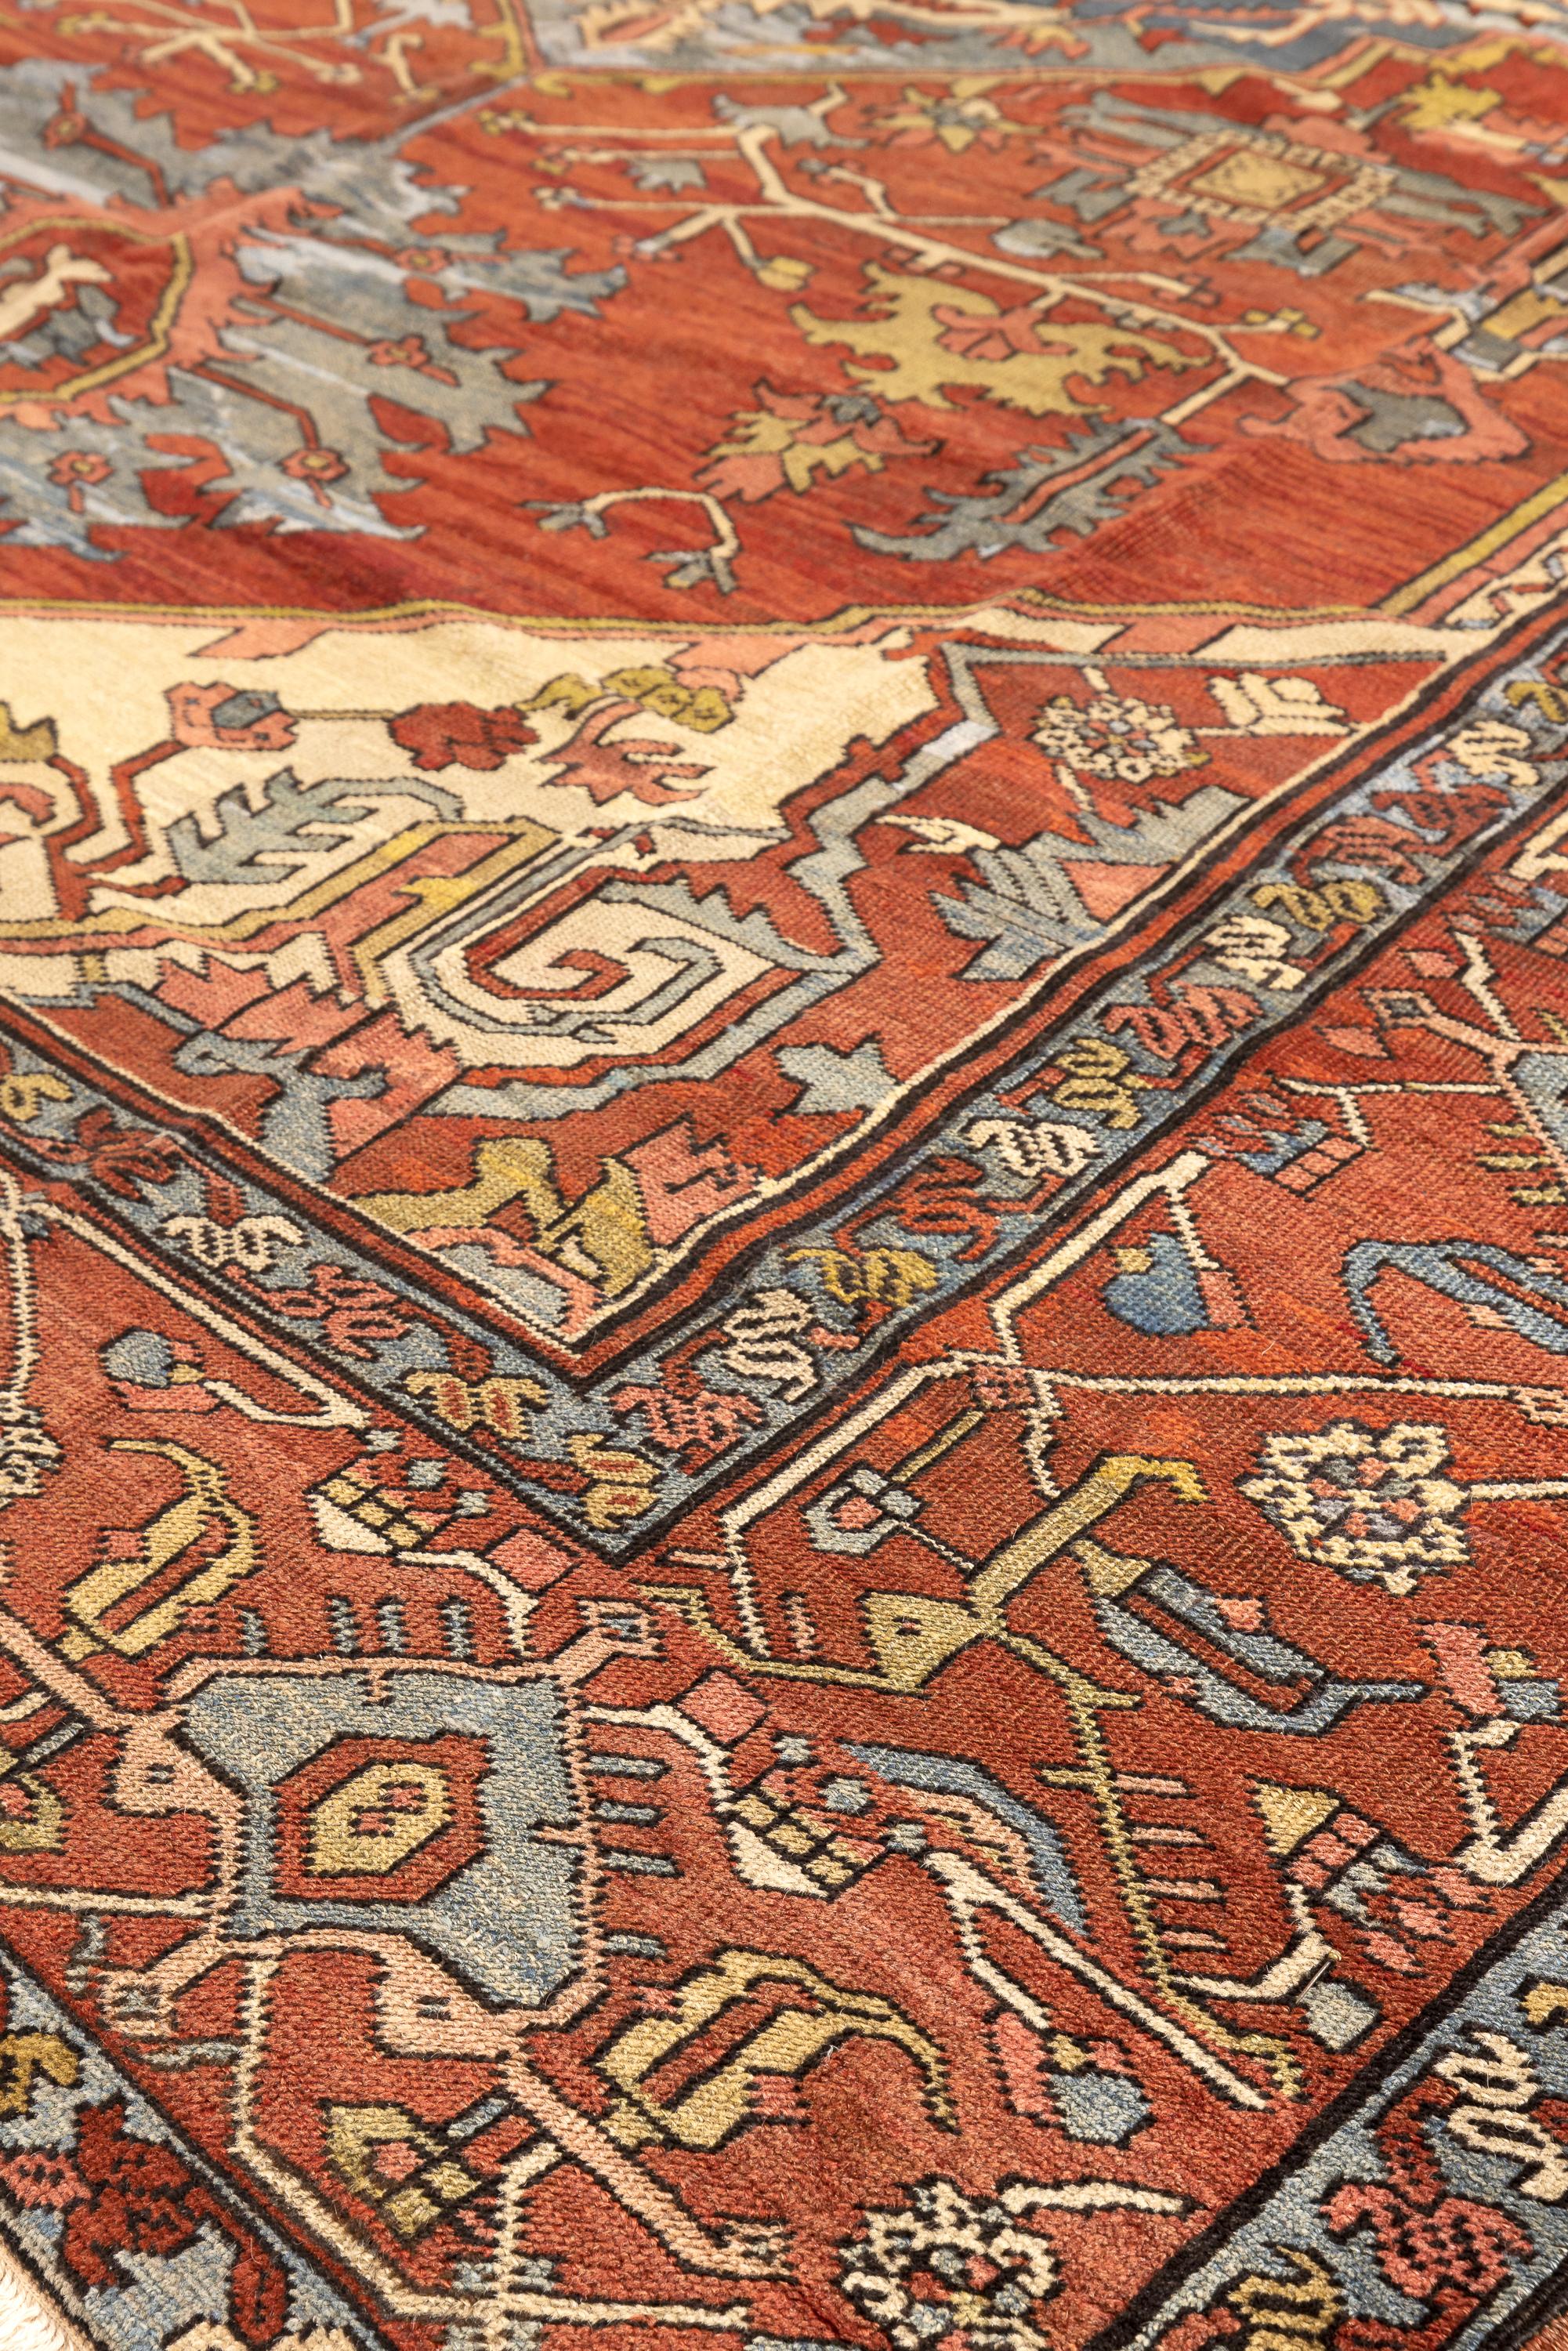 19th Century Antique Persian Serapi Carpet In Good Condition For Sale In Barueri, SP, BR